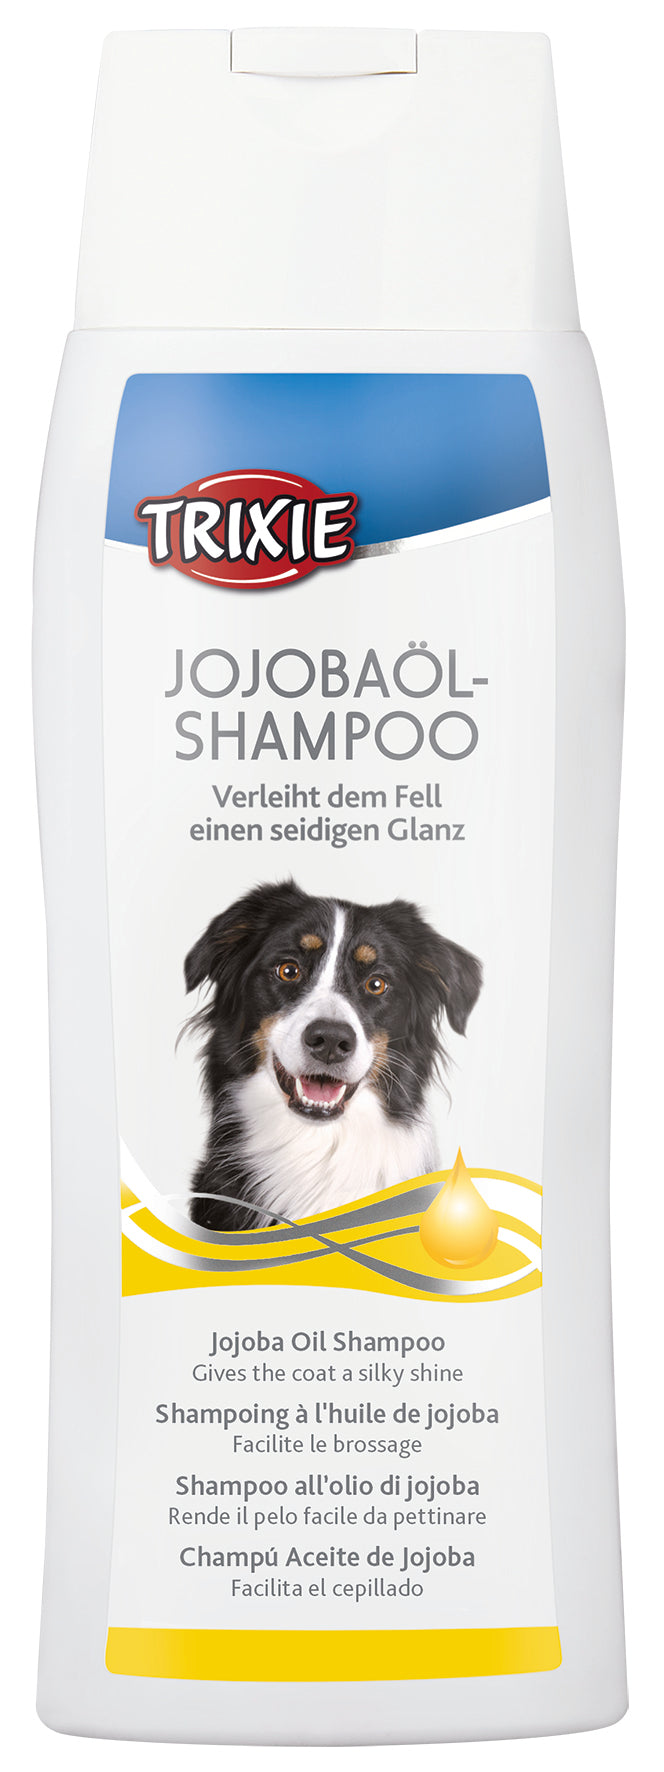 Jojoba Oil Shampoo